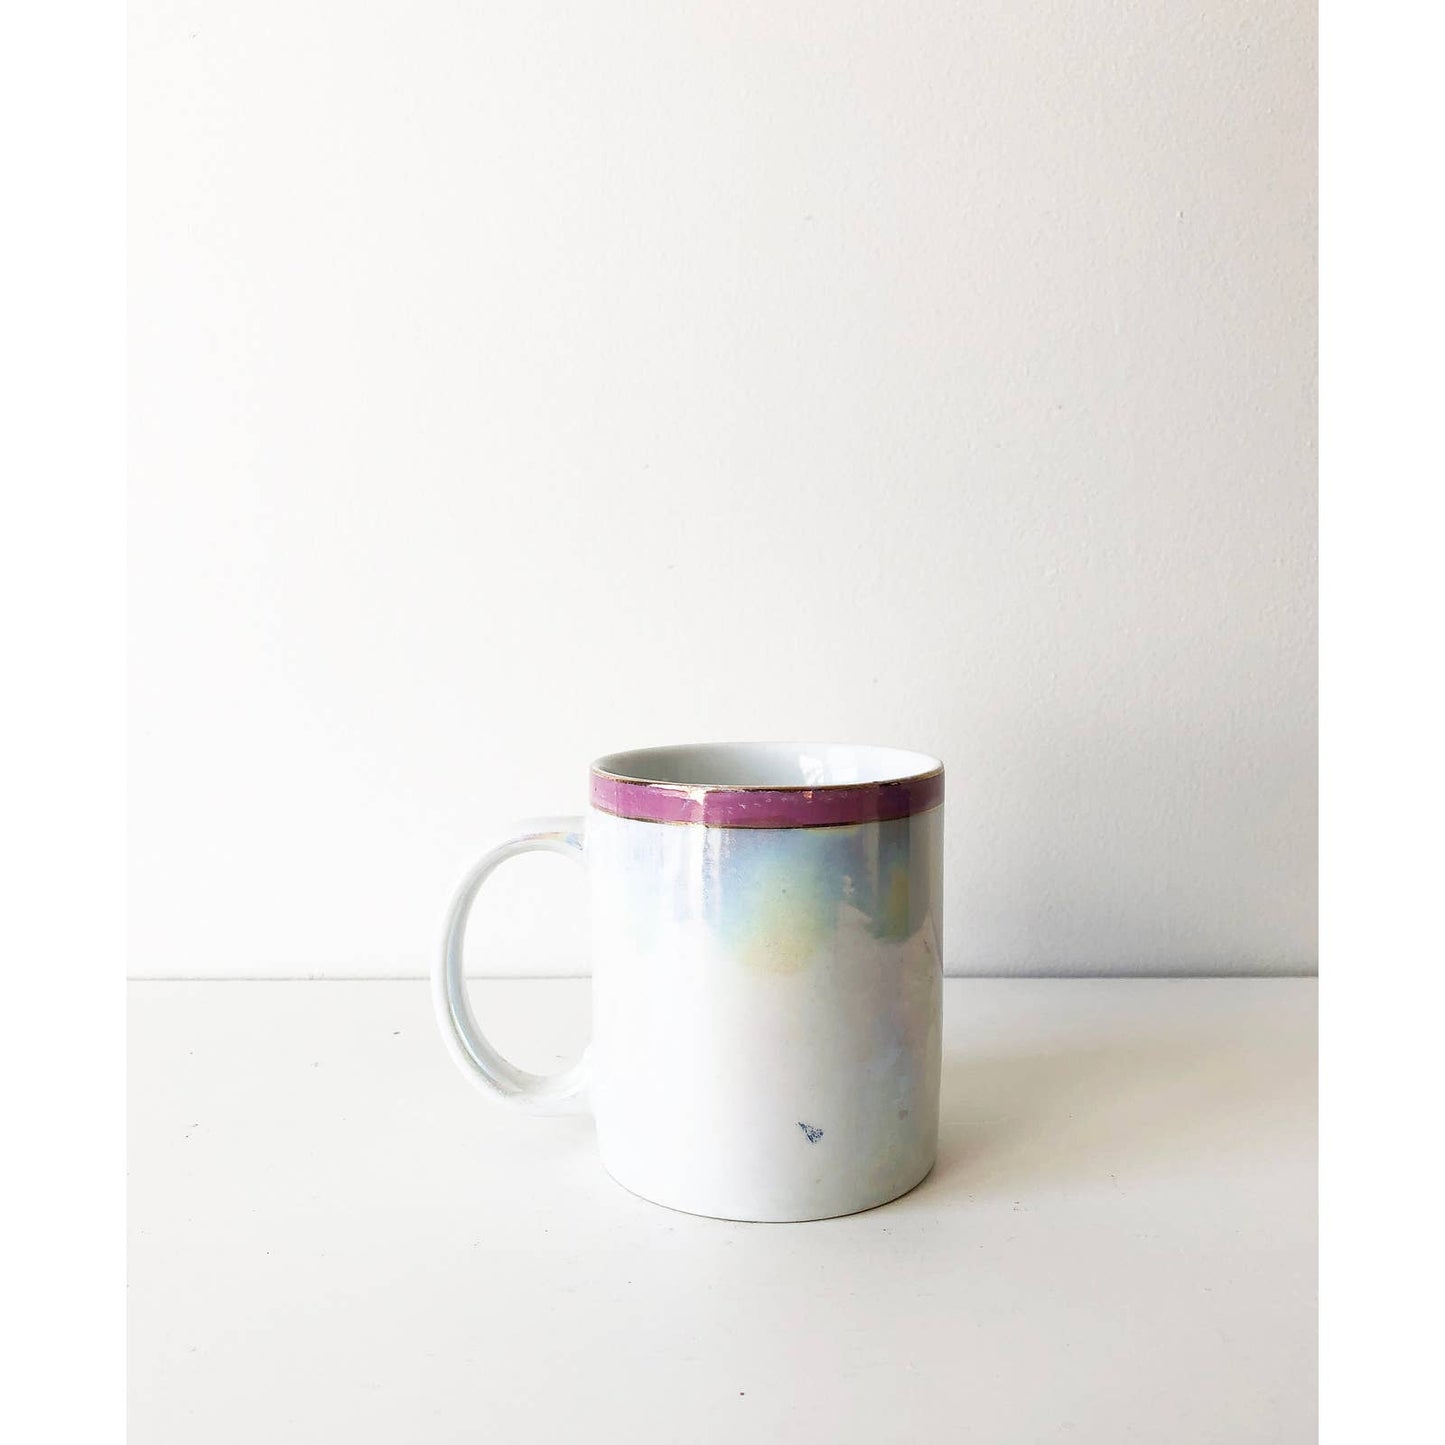 Cute Vintage Florida Mug | Iridescent Pink 80s Style Cup